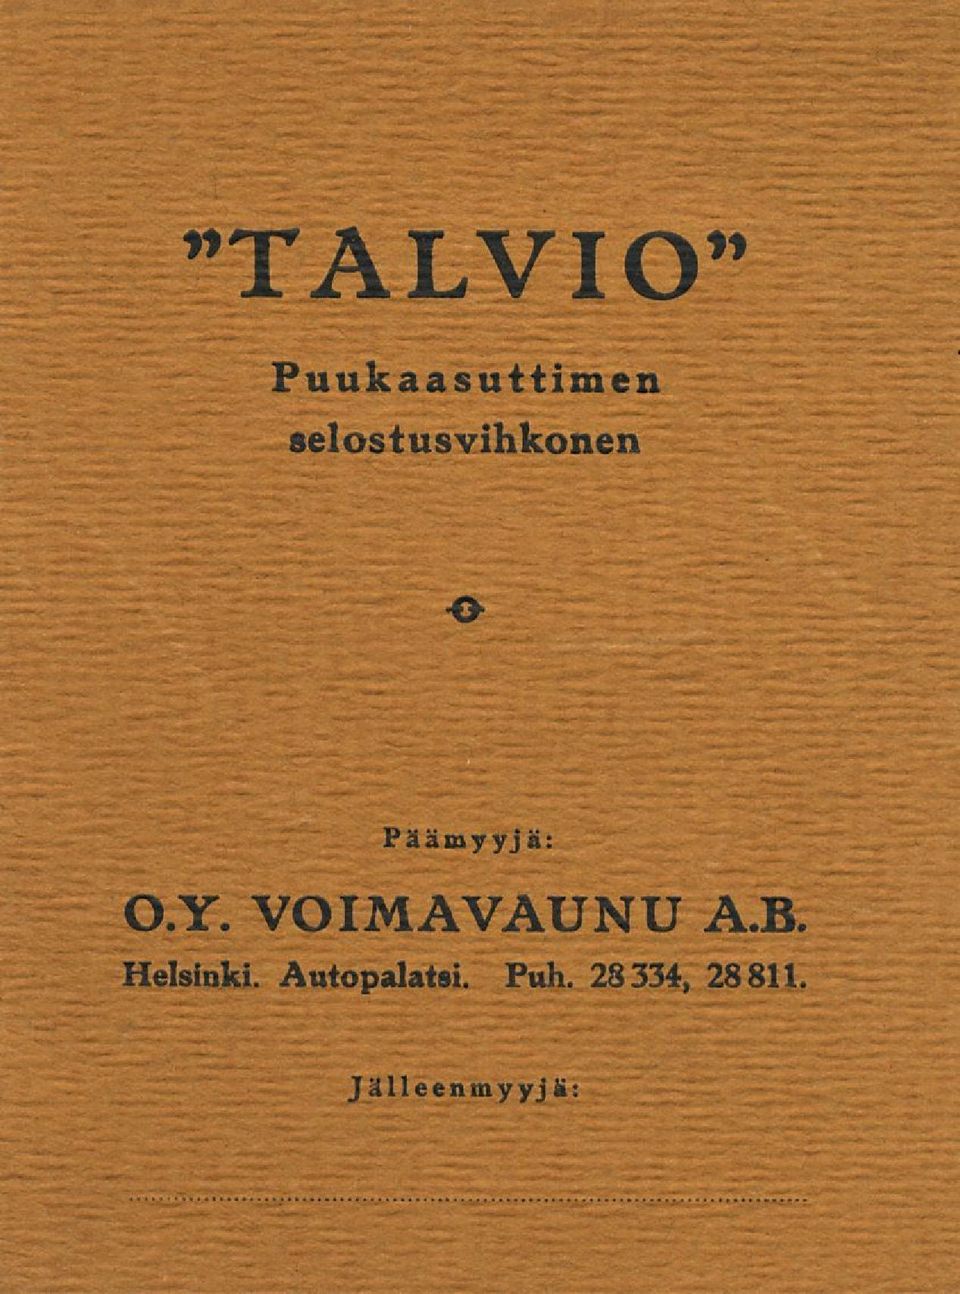 Y. VOIMAVAUNU A.B. Helsinki.